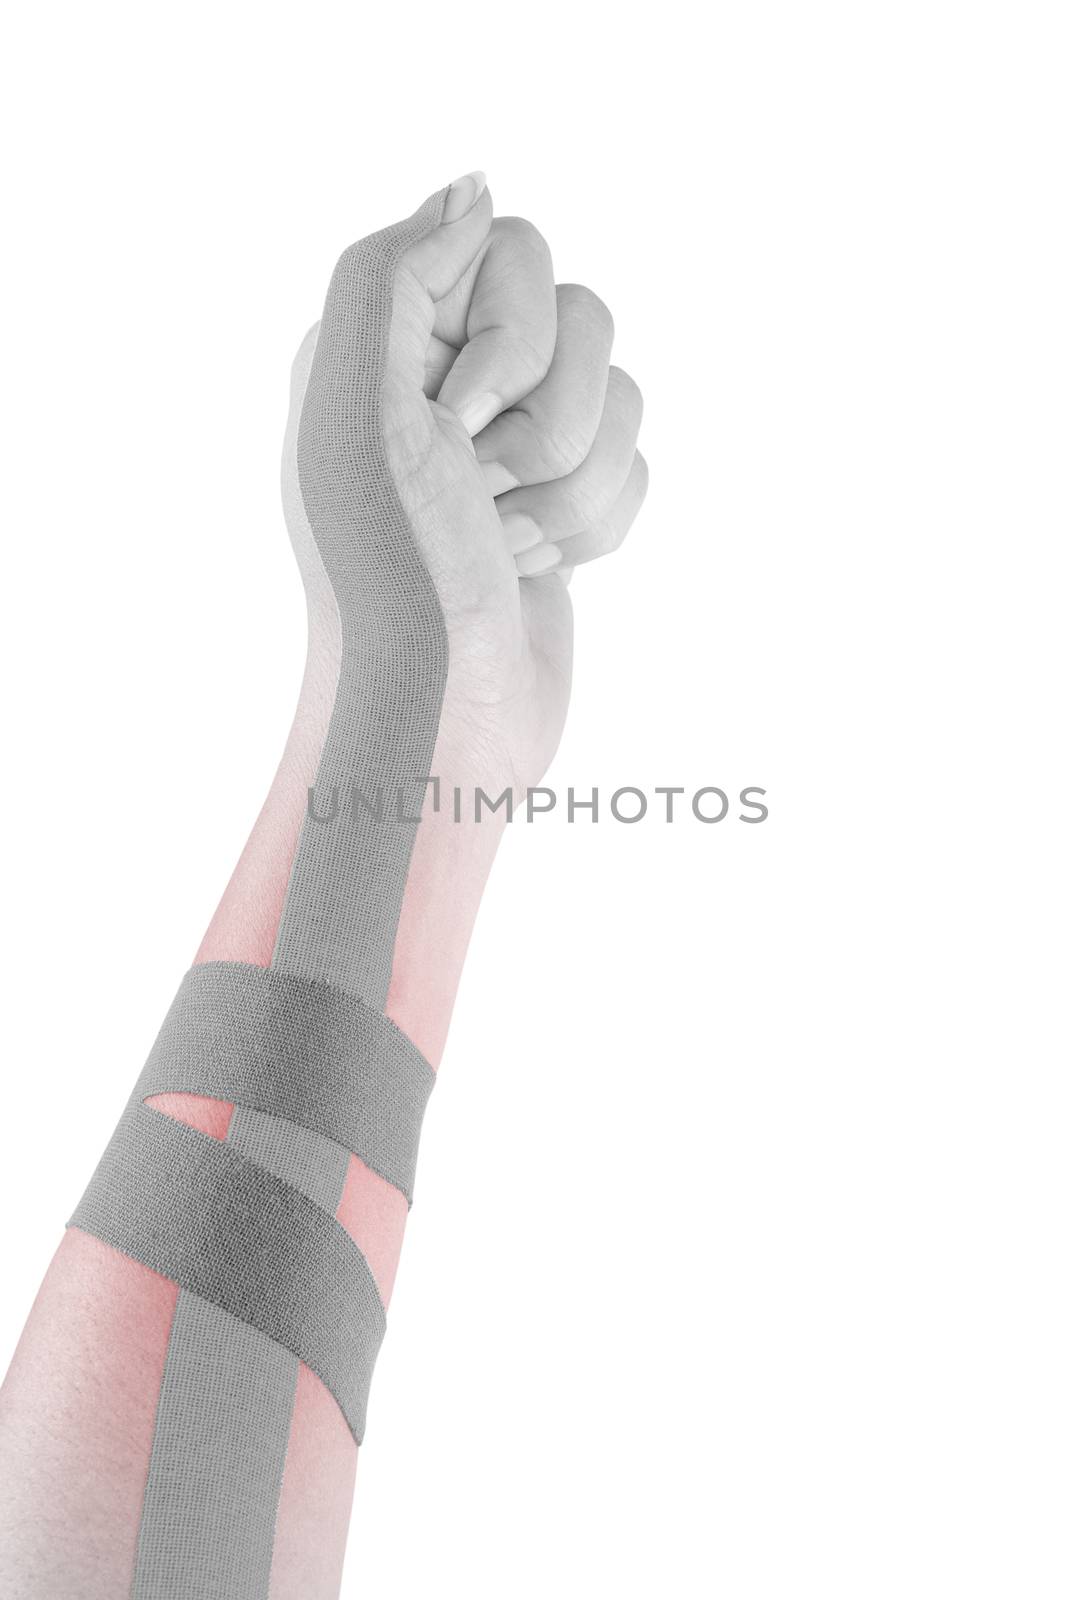 Kinesio tape on female hand. by eskymaks